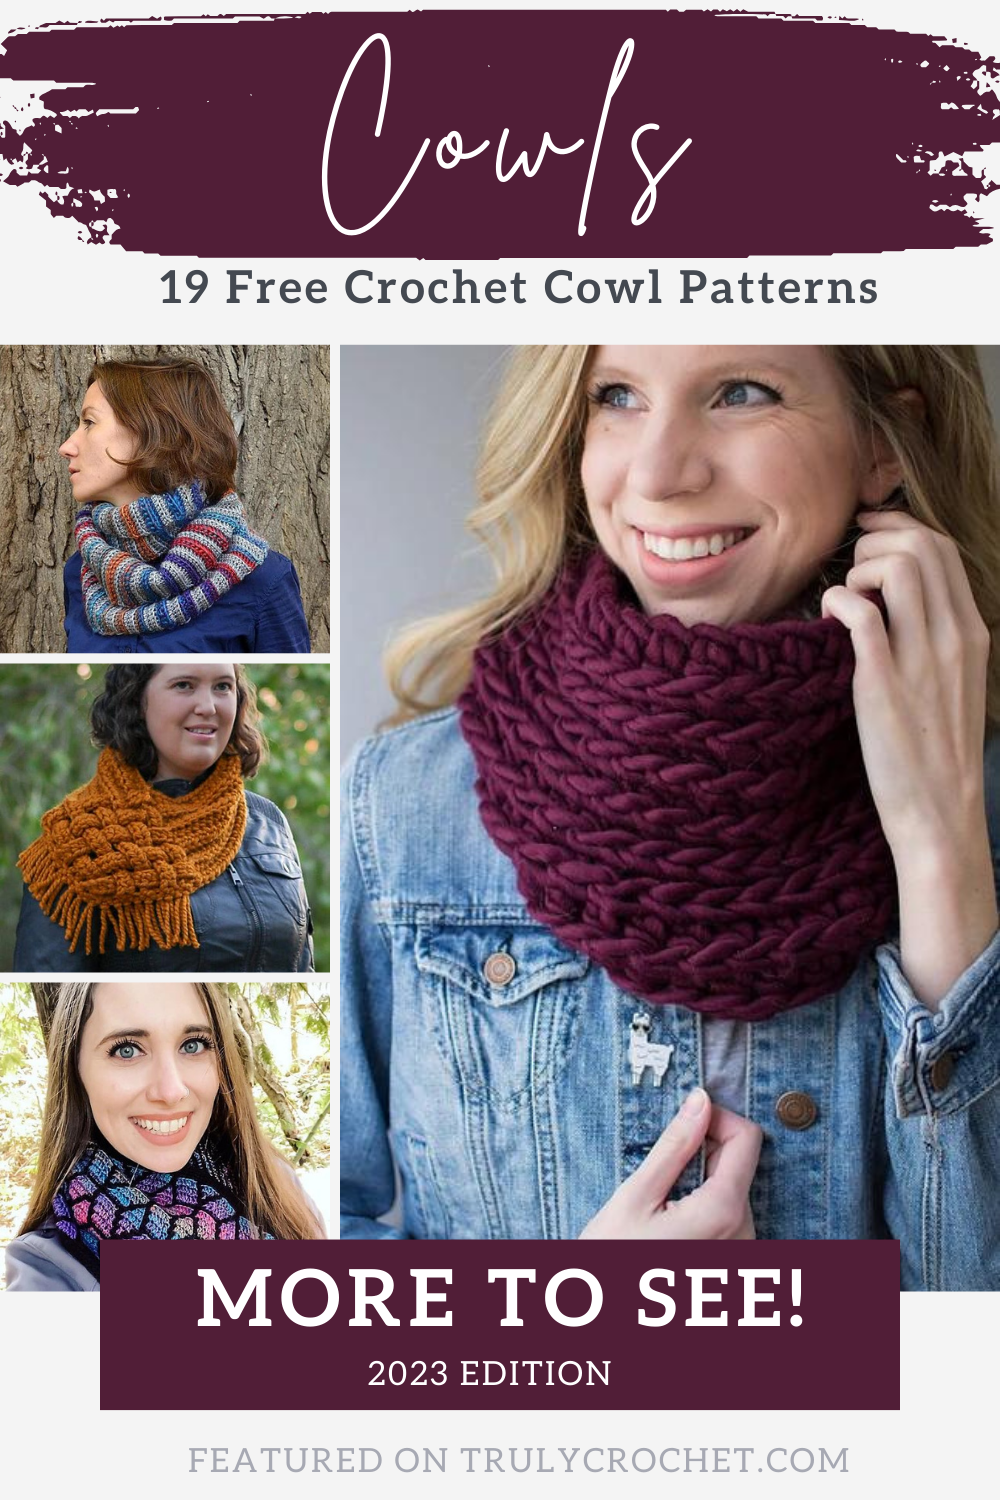 19 Free Crochet Cowl Patterns - 2023 Edition